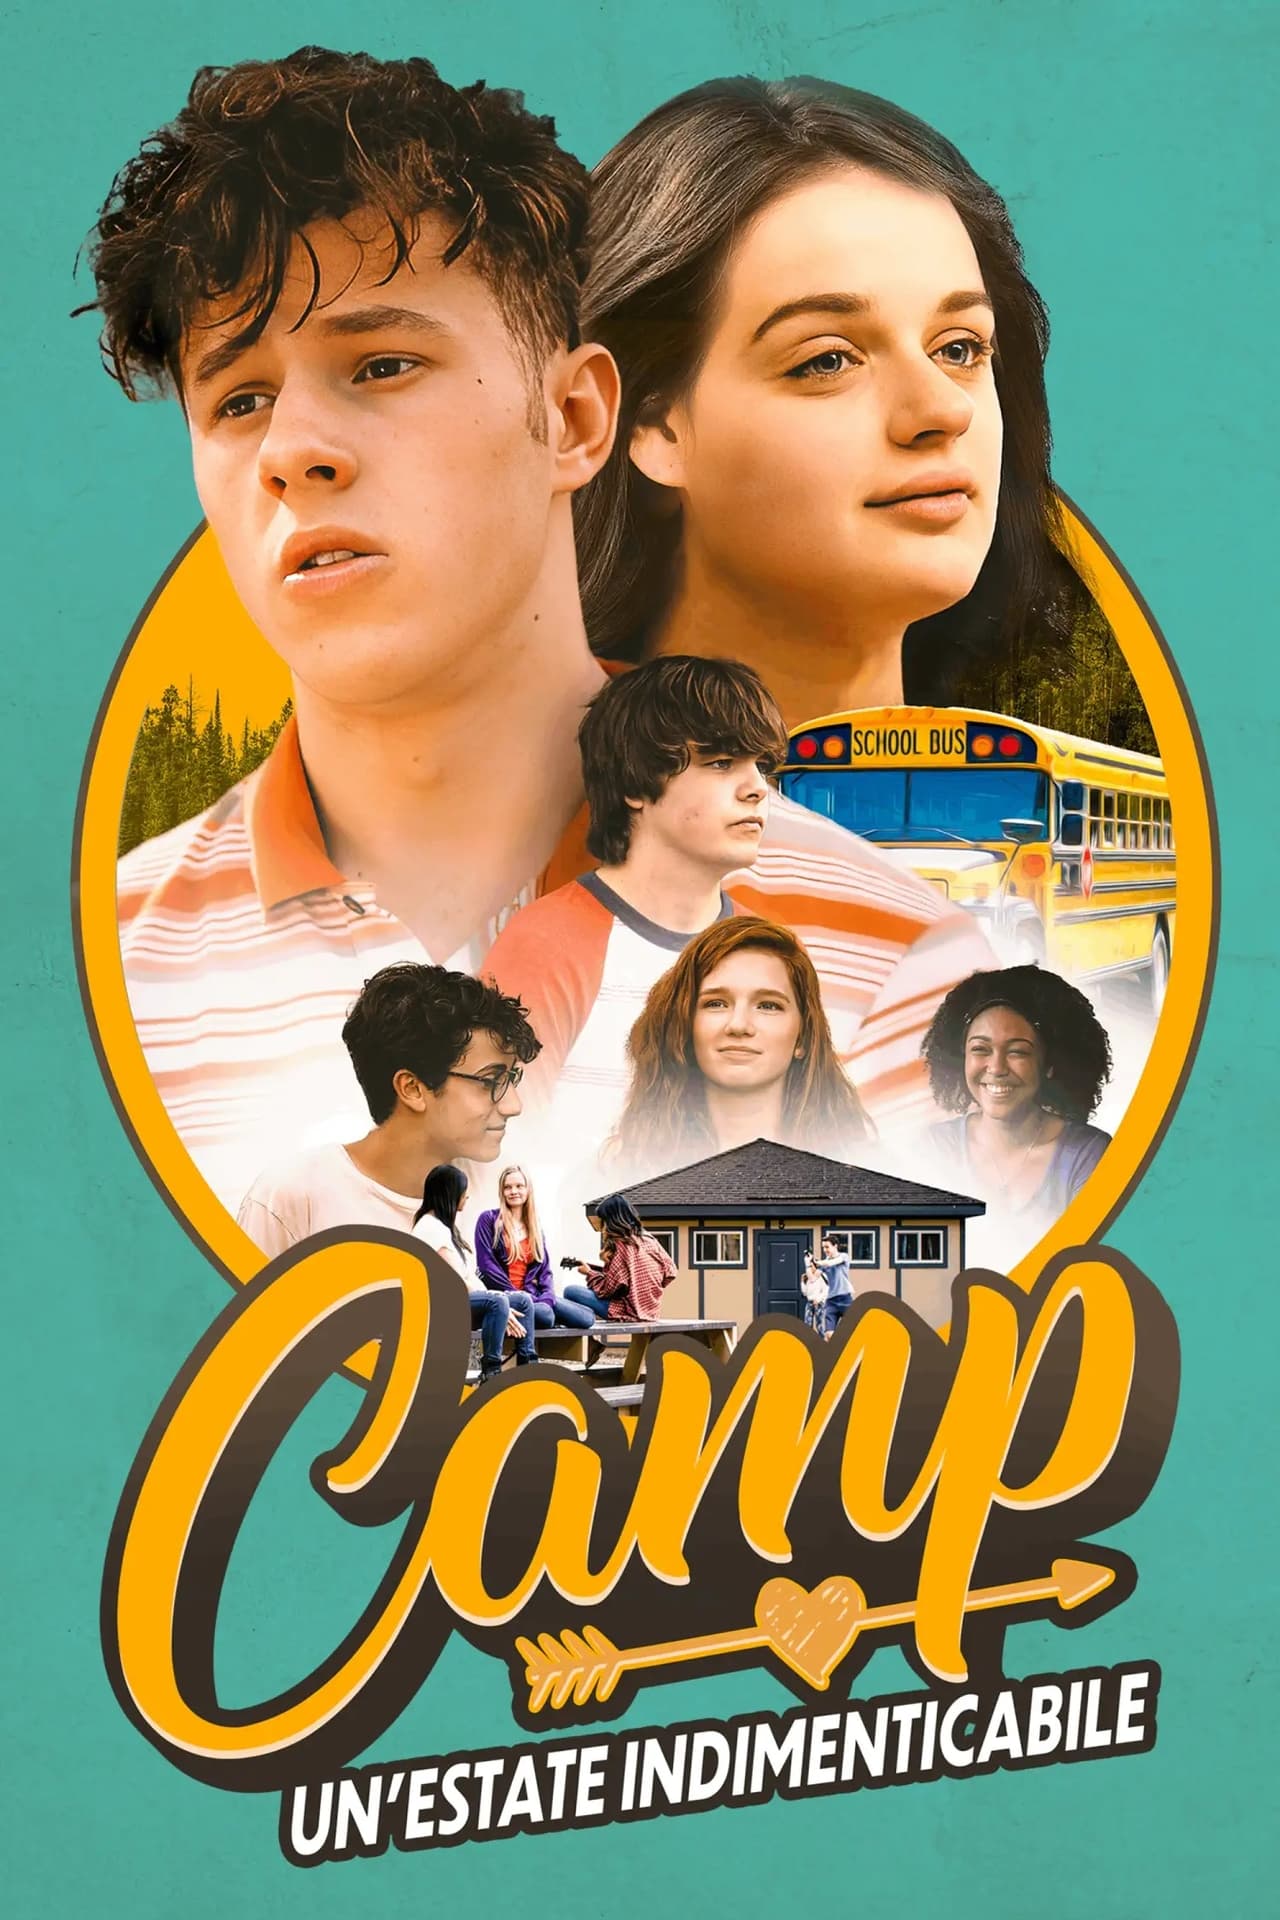 https://www.themoviedb.org/movie/527969-camp